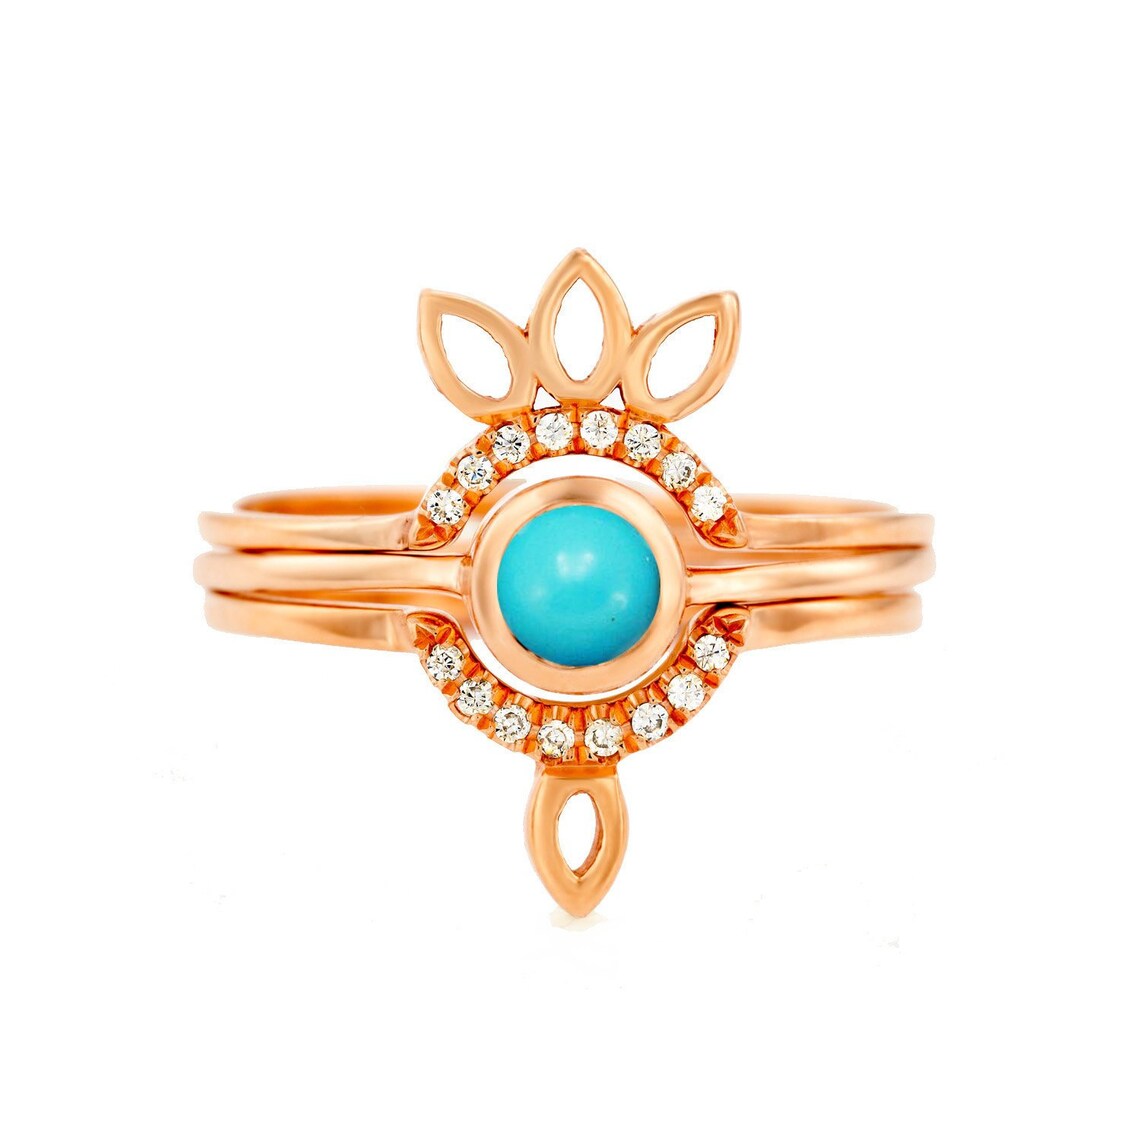 Turquoise Rings Set of 3 with diamondsDiamonds ring | Etsy